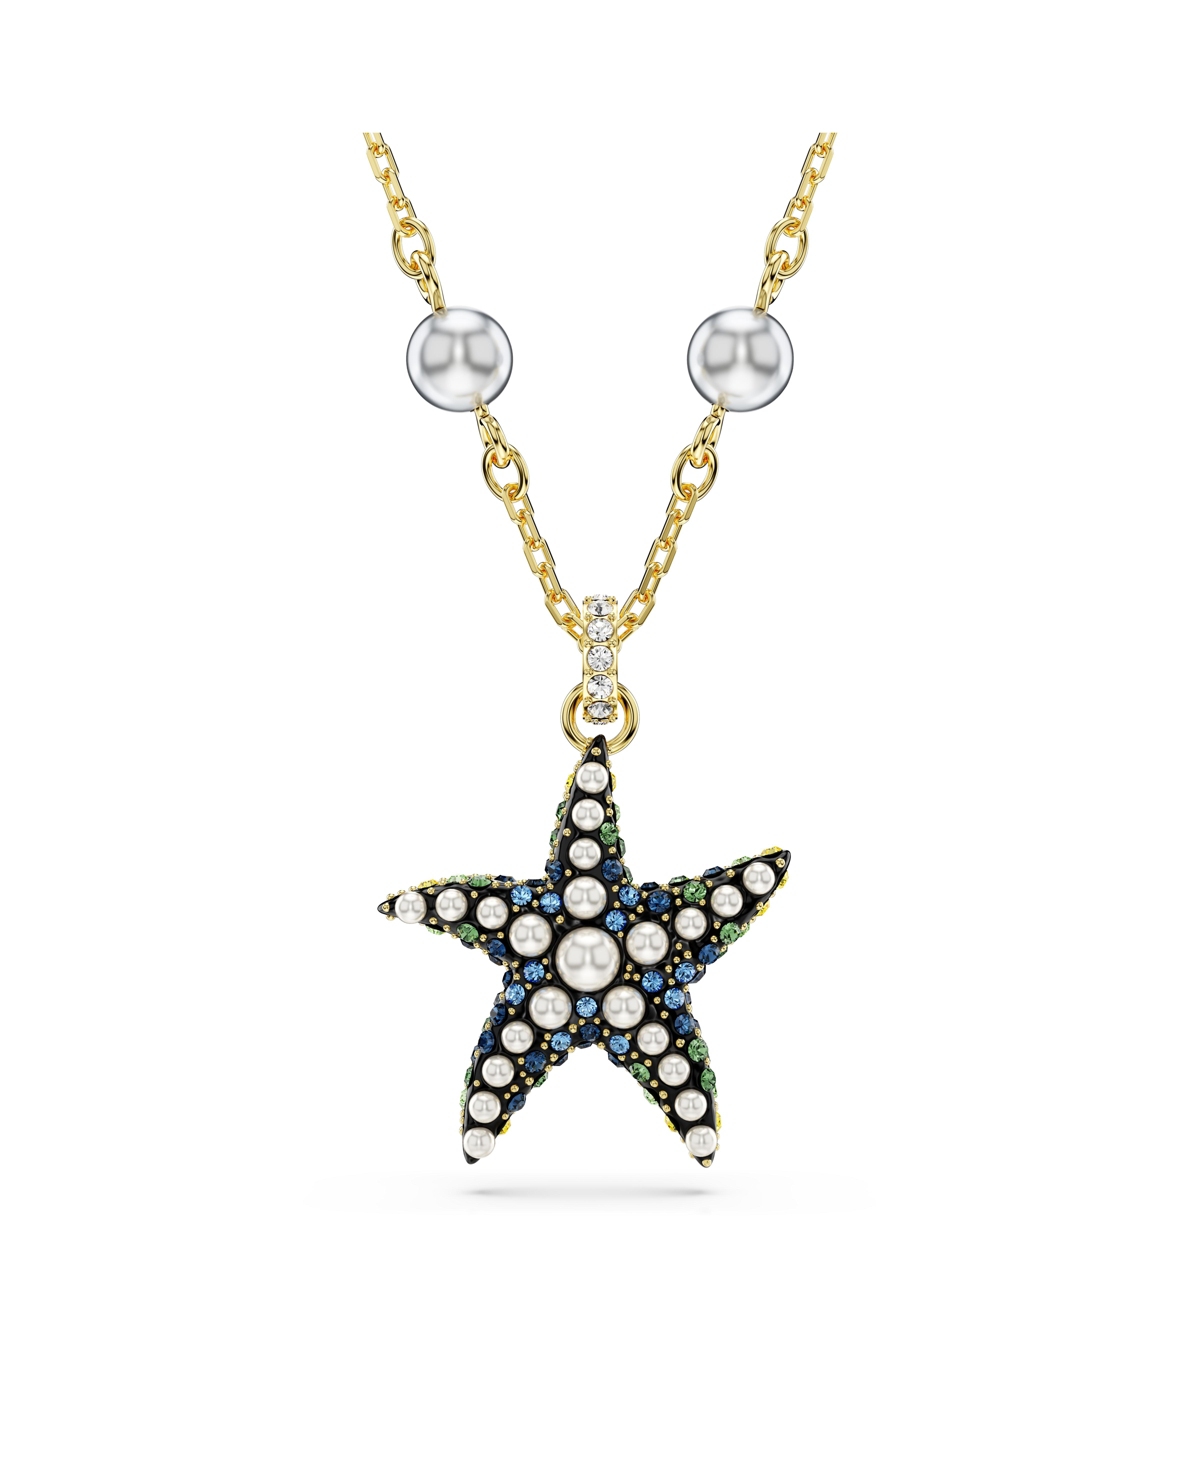 Crystal Swarovski Imitation Pearls, Starfish, Multicolored, Gold-Tone Idyllia Pendant Necklace - Blue